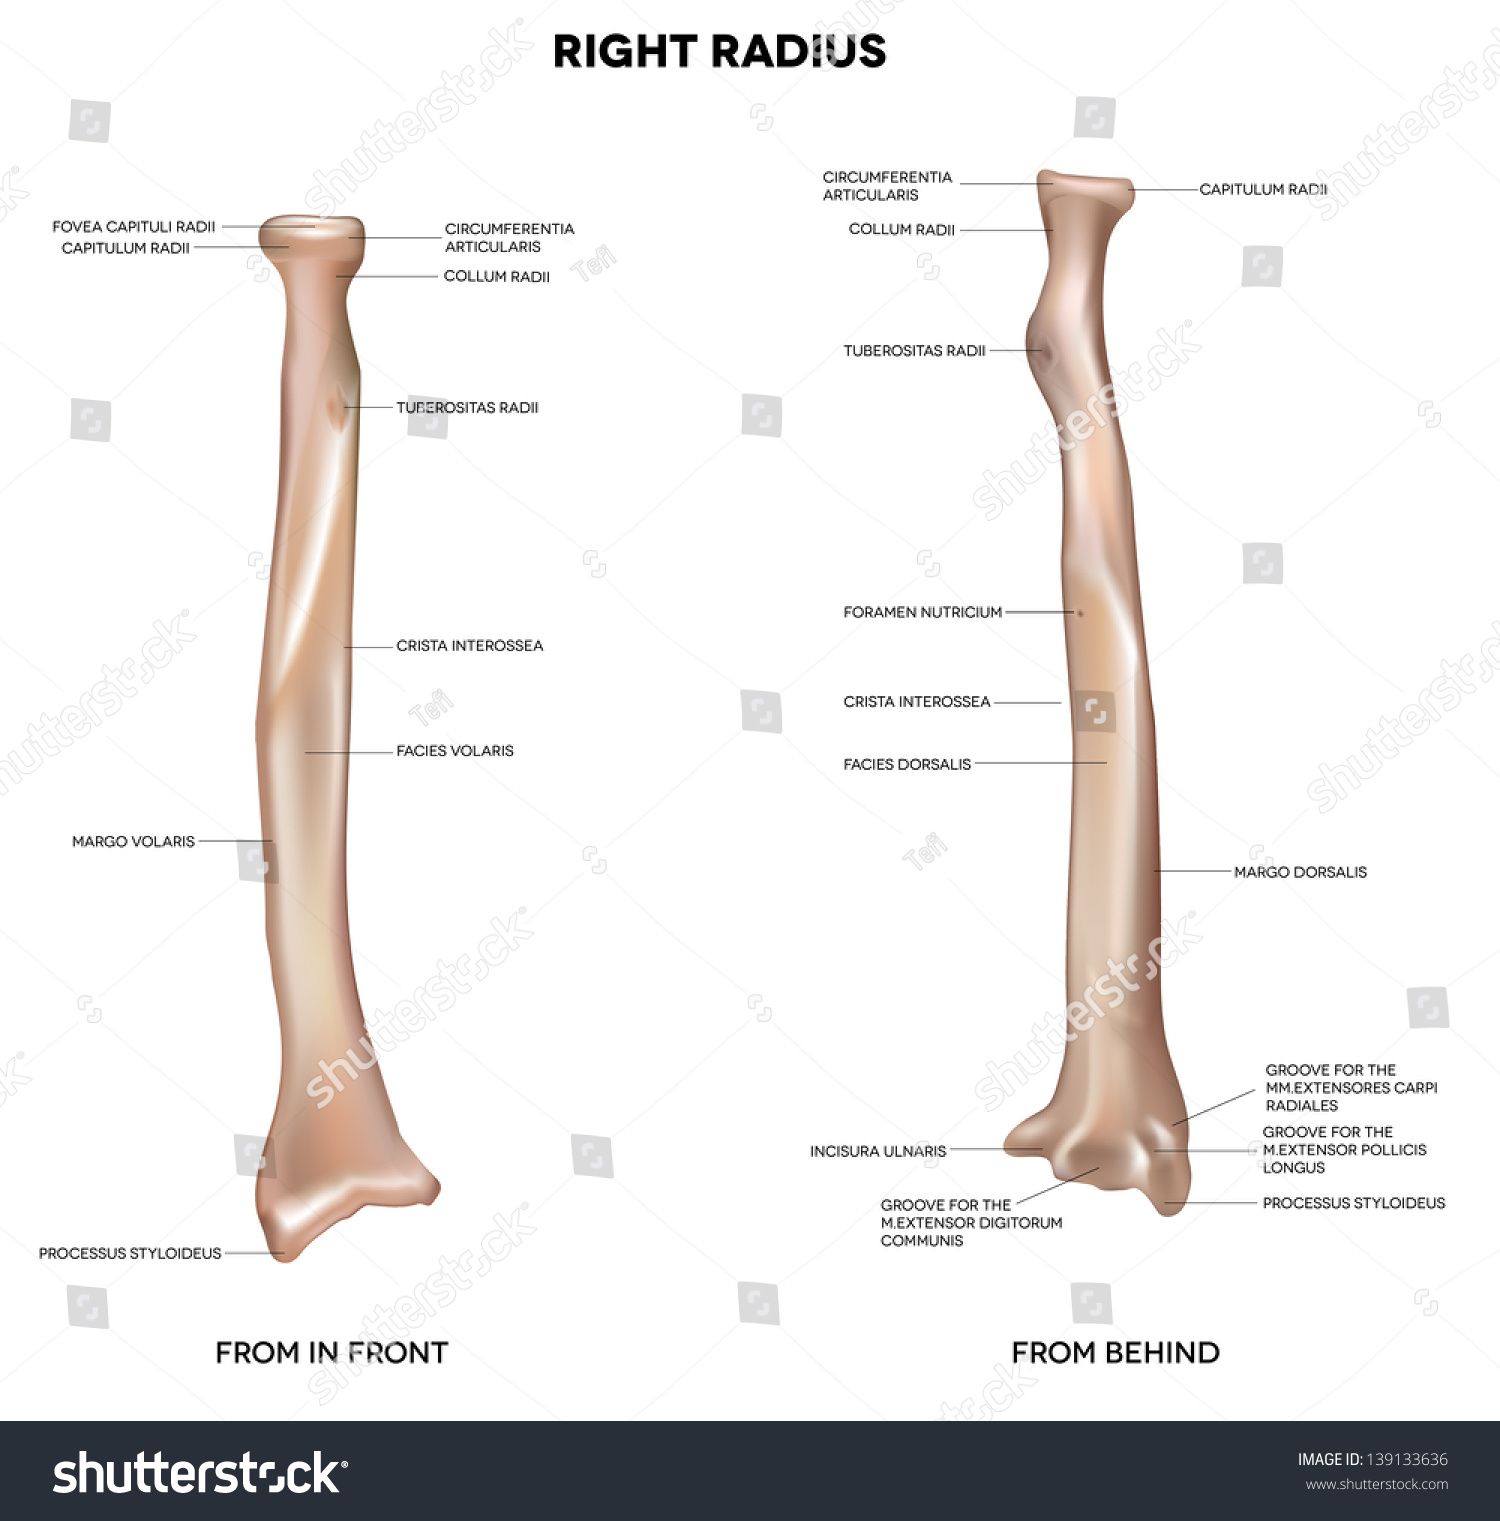 Radius Human Right Bone Detailed Medical Illustration